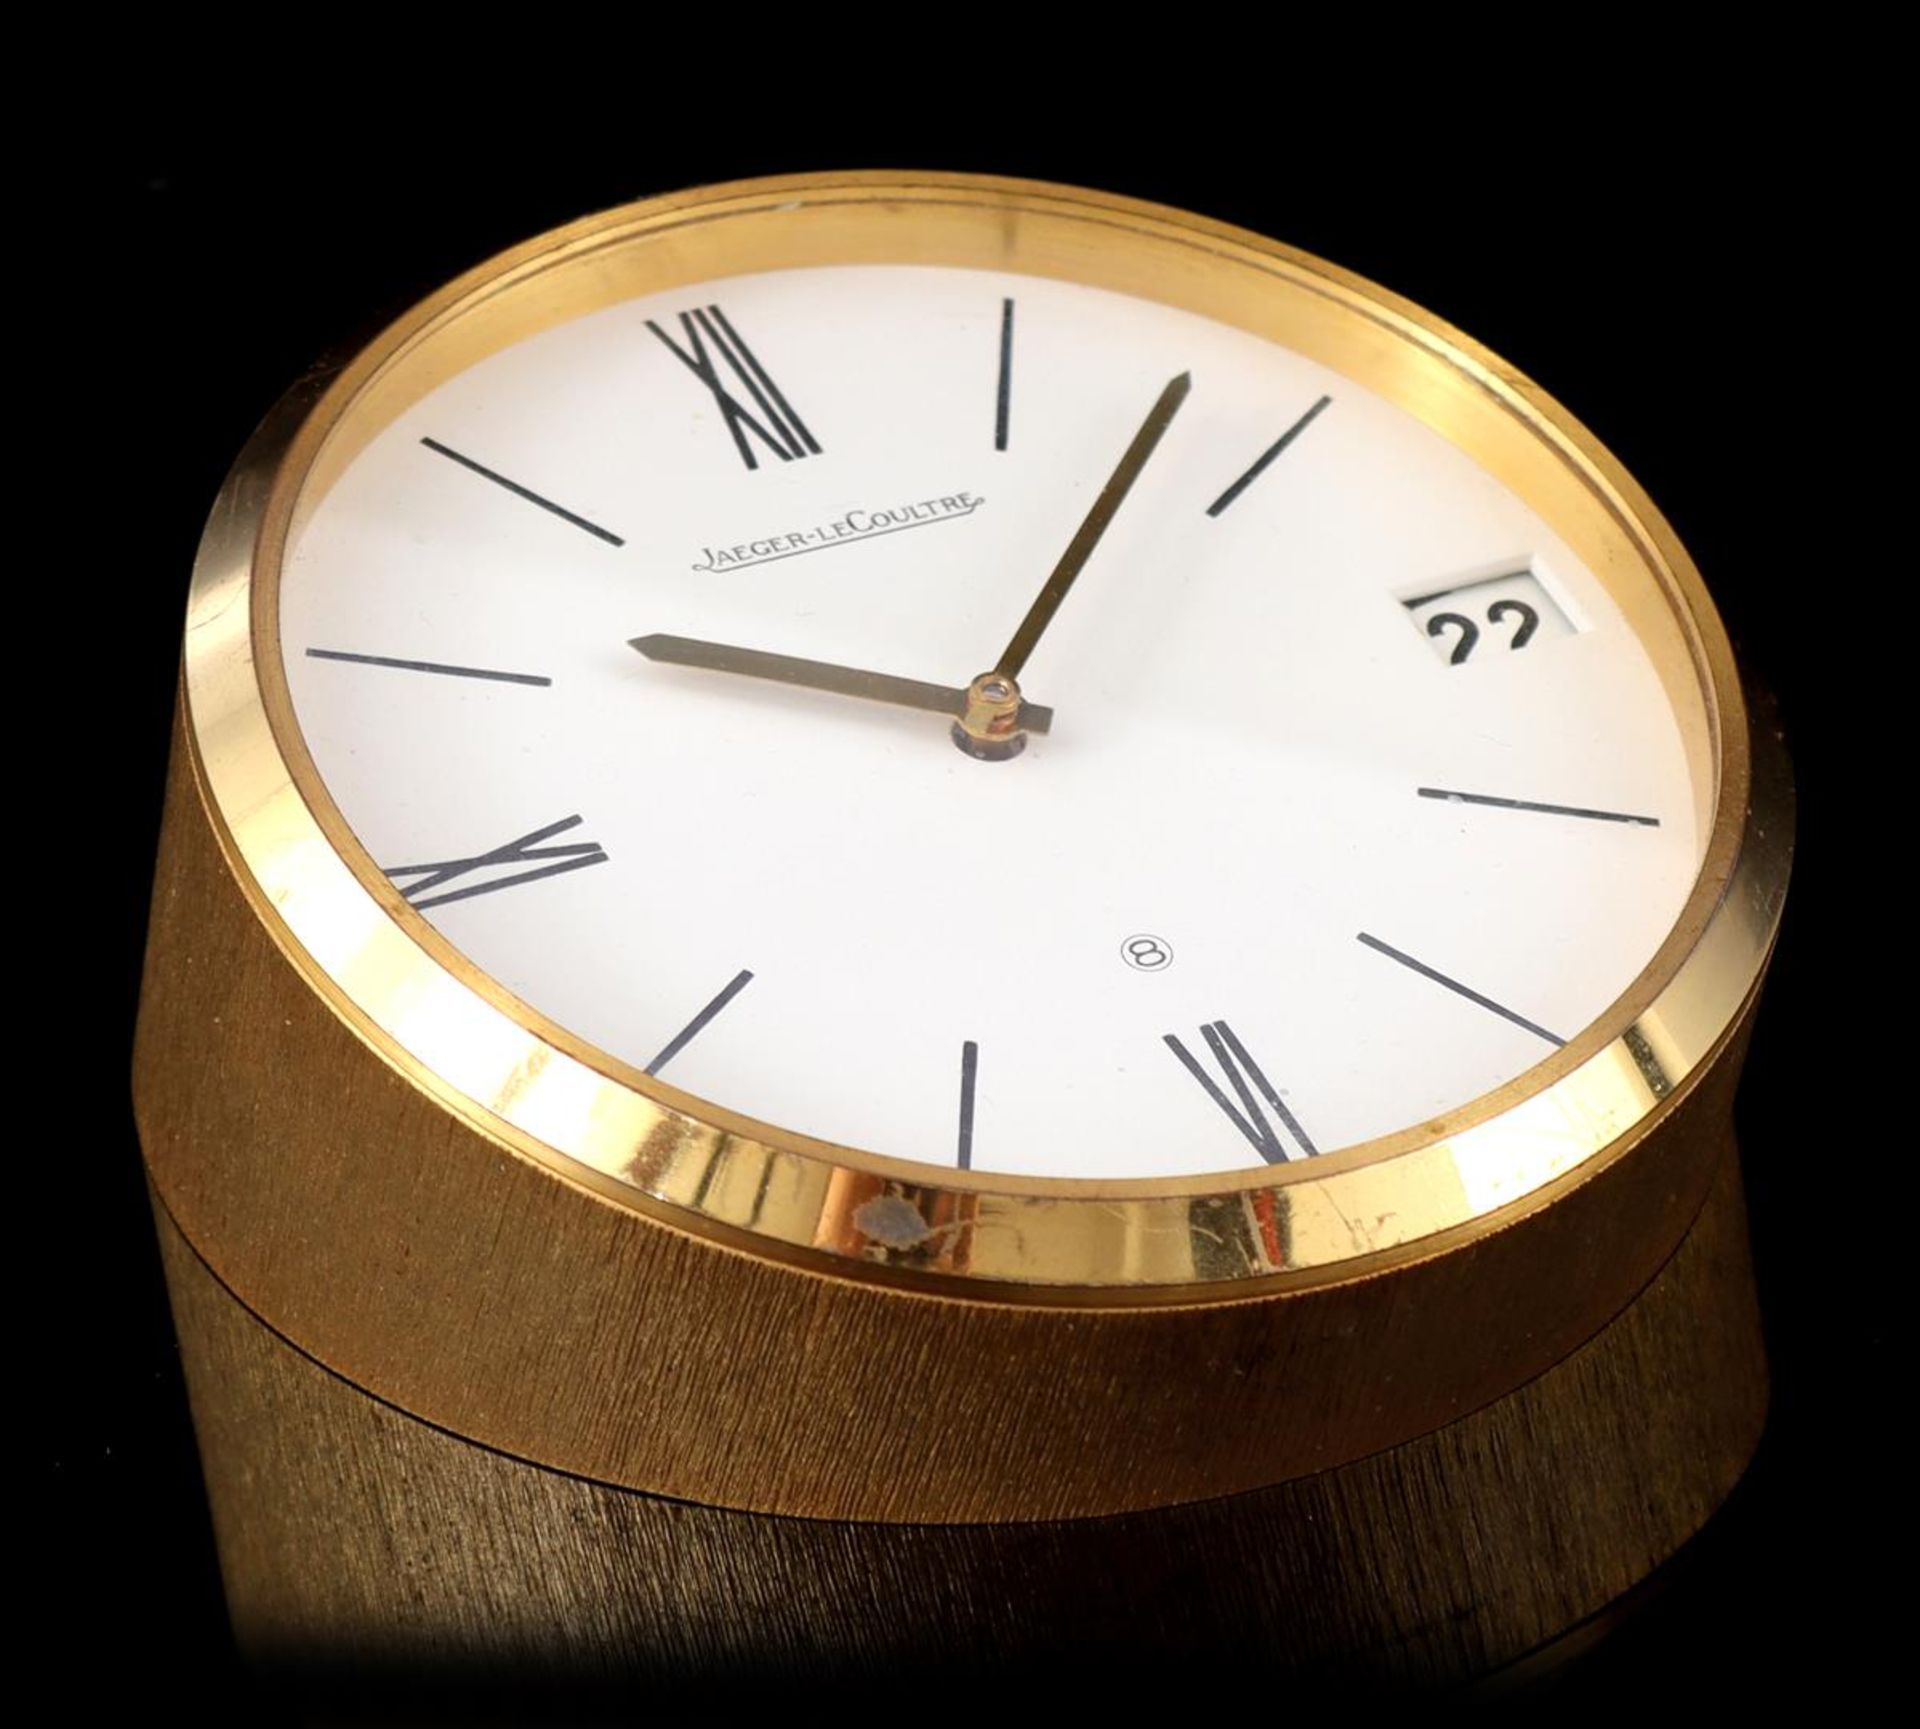 Jaeger LeCoultre table clock